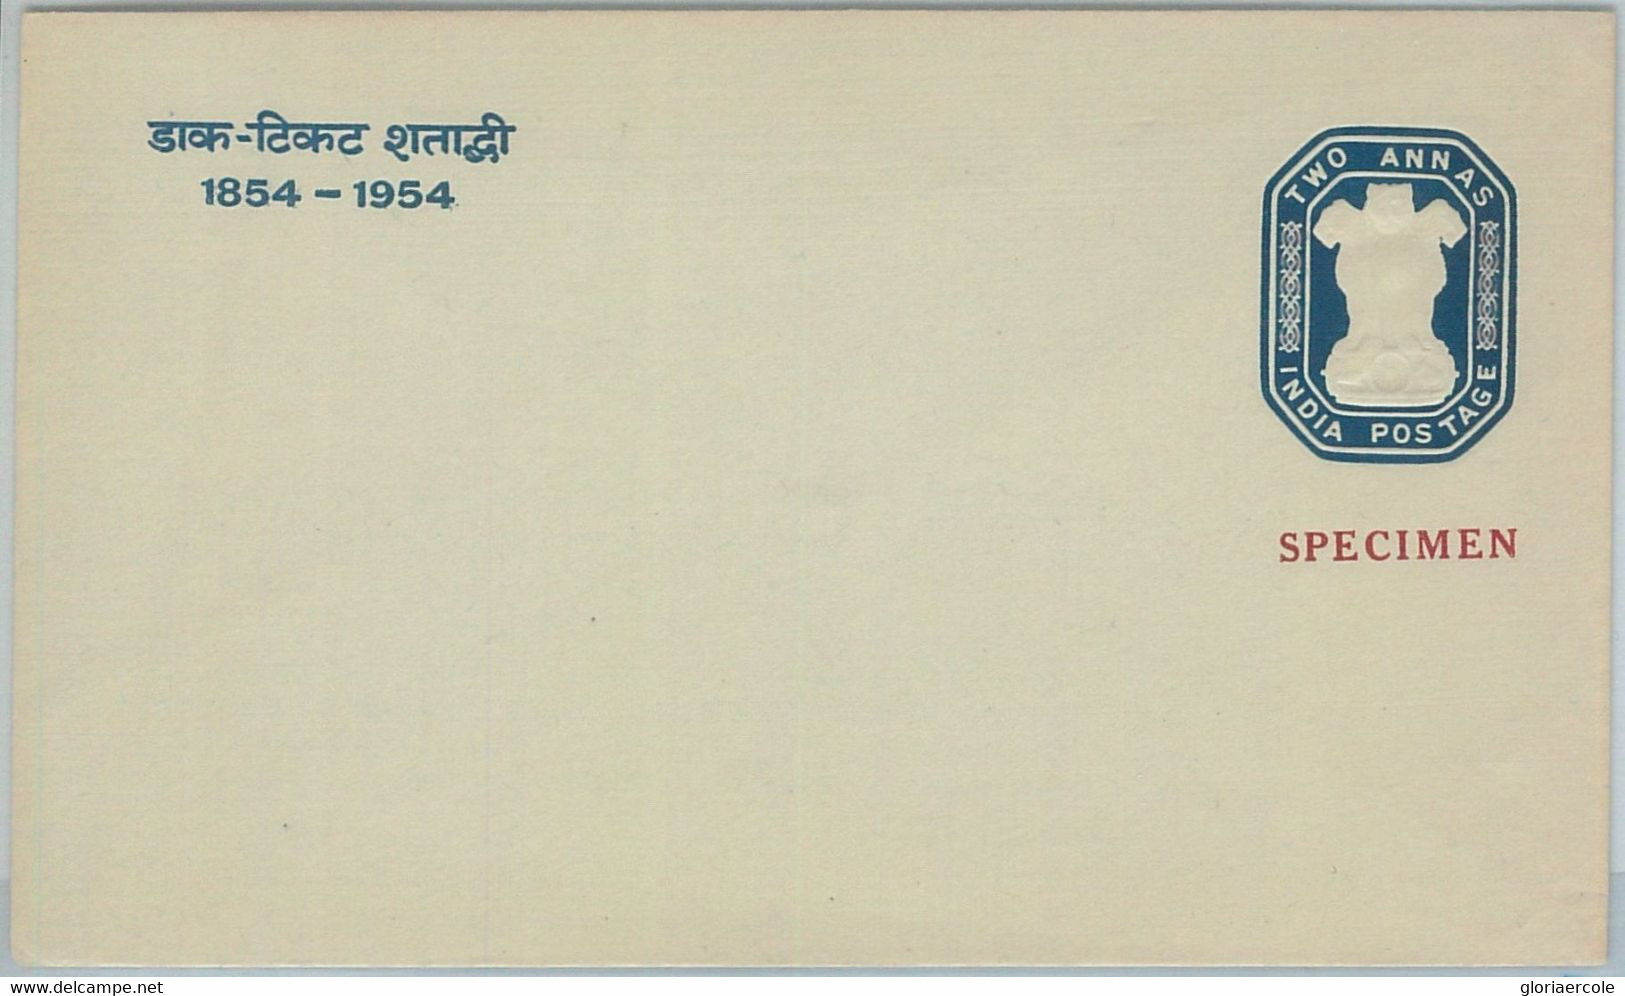 74840 - INDIA -  POSTAL HISTORY -  STATIONERY COVER Overprinted SPECIMEN - 1954 - Buste